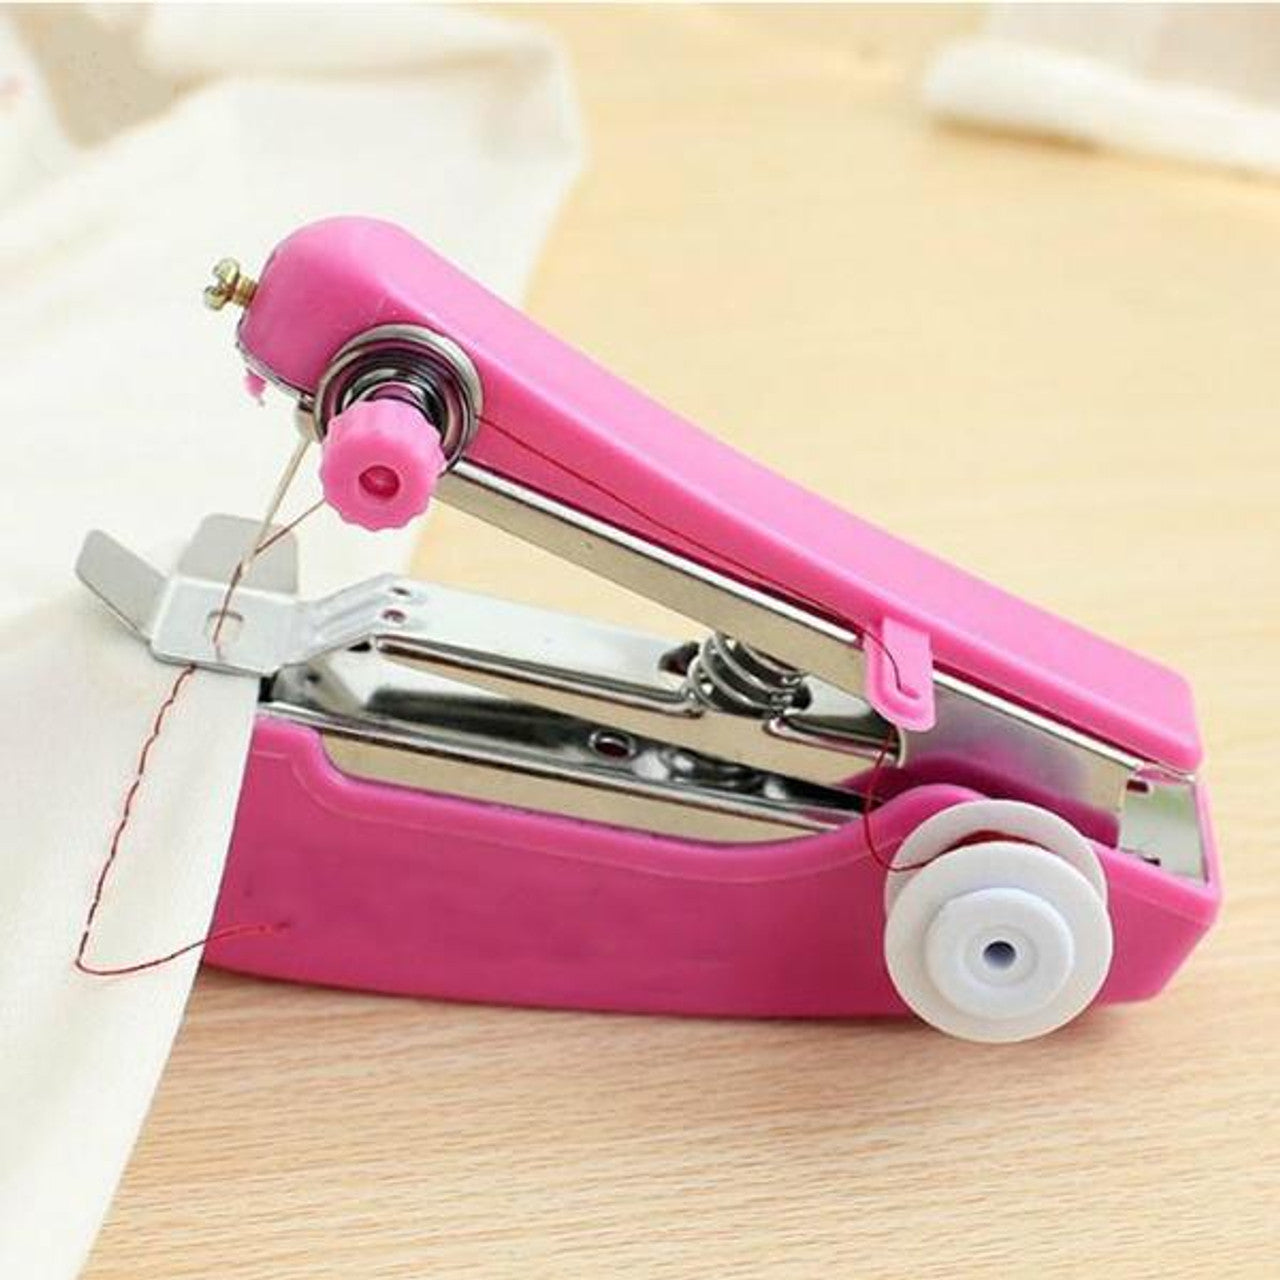 Tanoxy Mini Sewing Machine